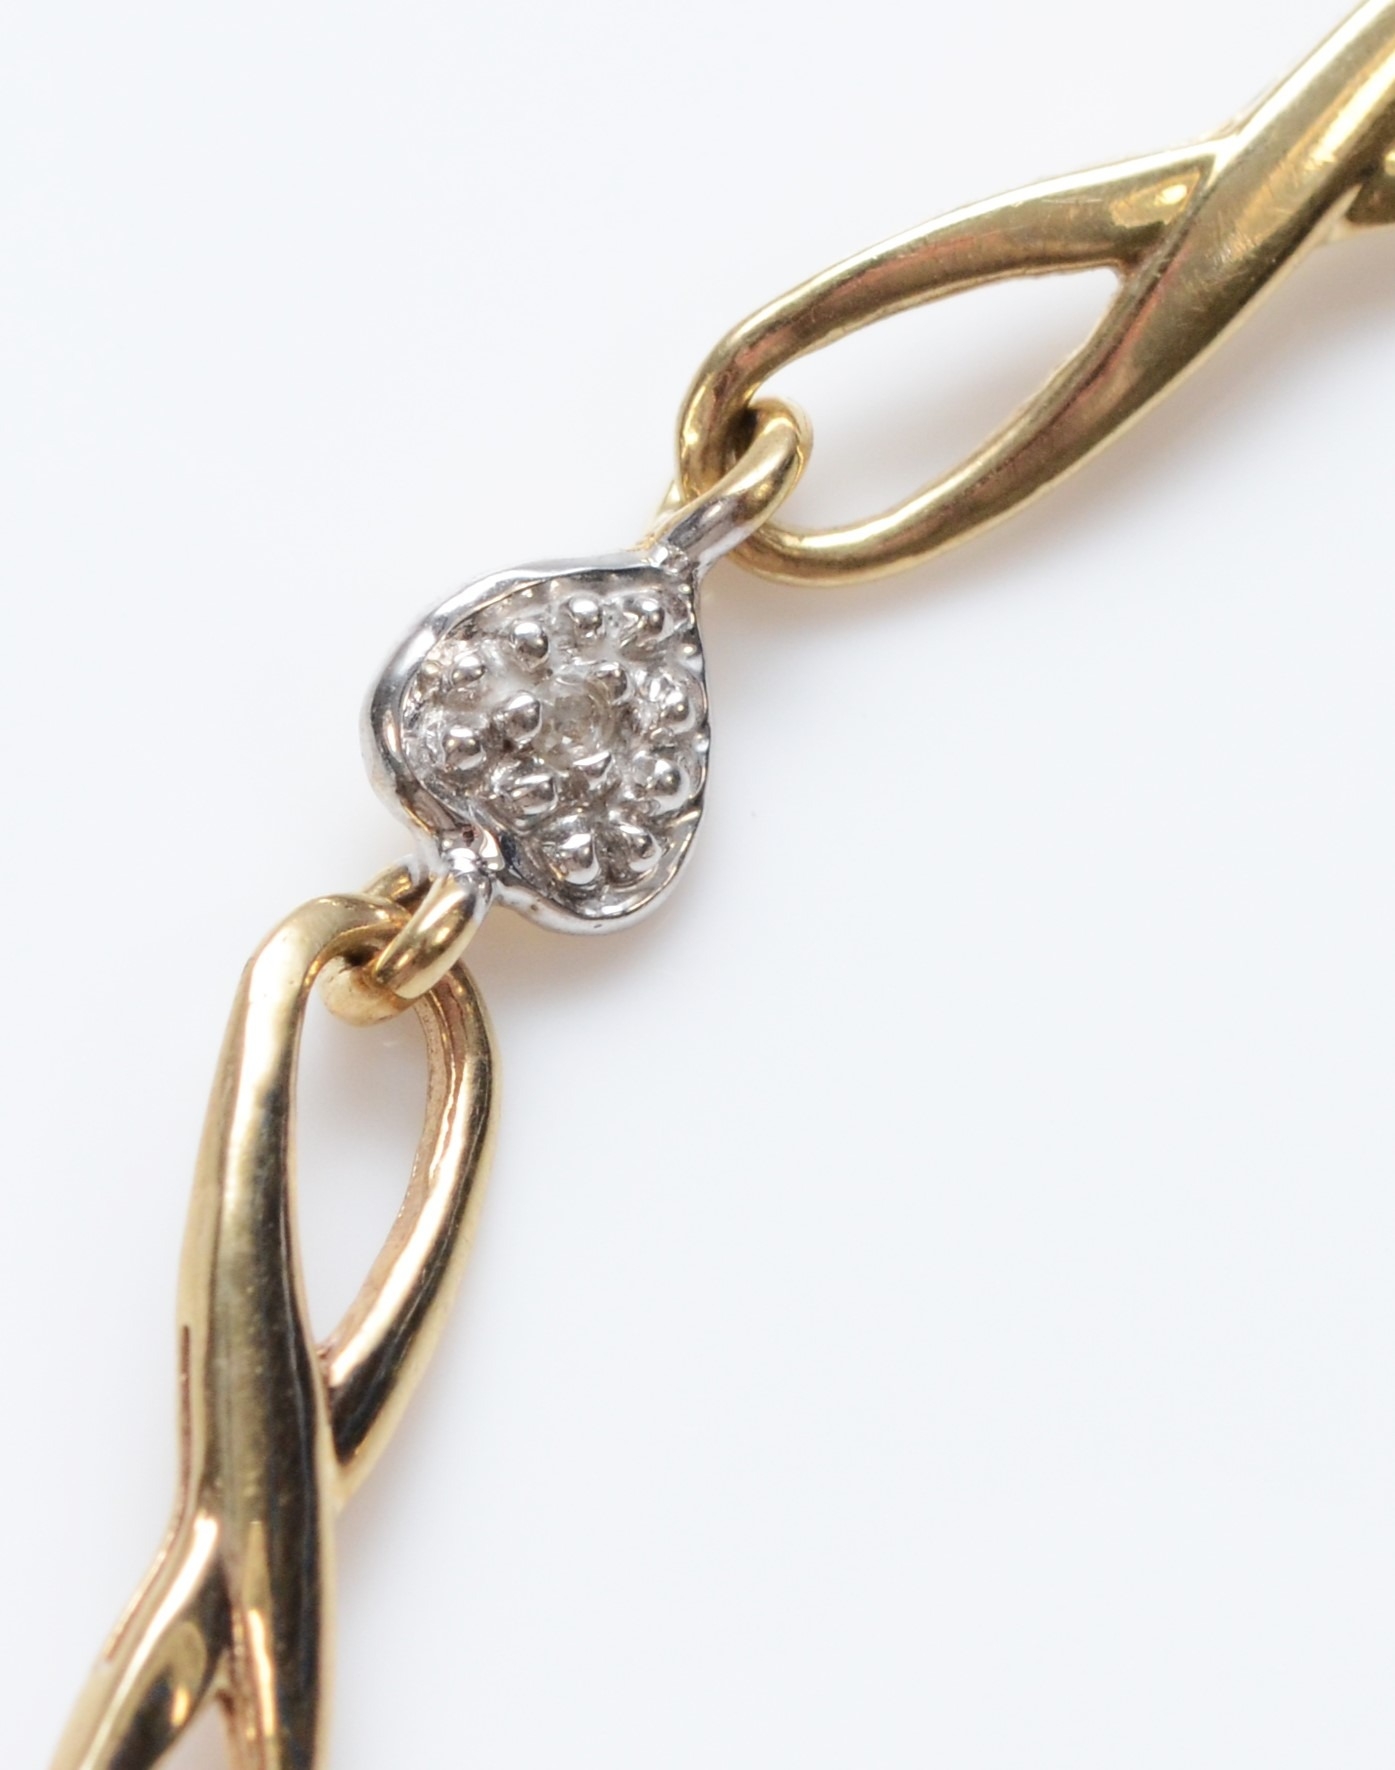 9ct gold sapphire and diamond bracelet, 18cm, 3.5gm - Image 2 of 2